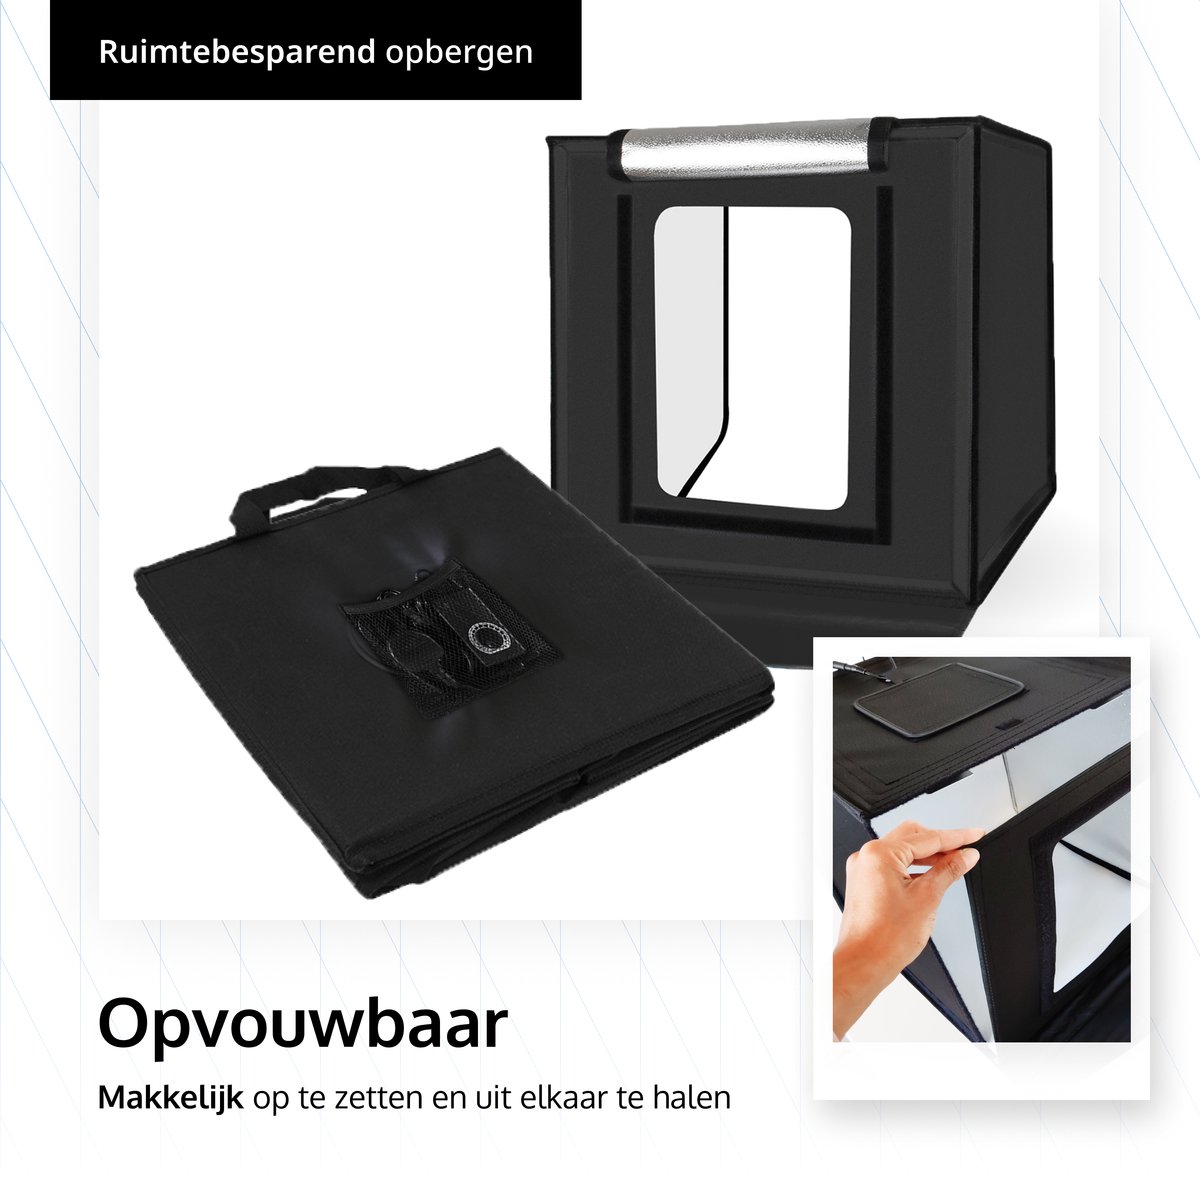 Professionele Fotostudio Box inclusief Tripod - LED verlichting - Lightbox Fotografie - Fotobox - Productfotografie Foto Studio - 40 x 40 x 40 cm - 6 Achtergronden - PULUZ